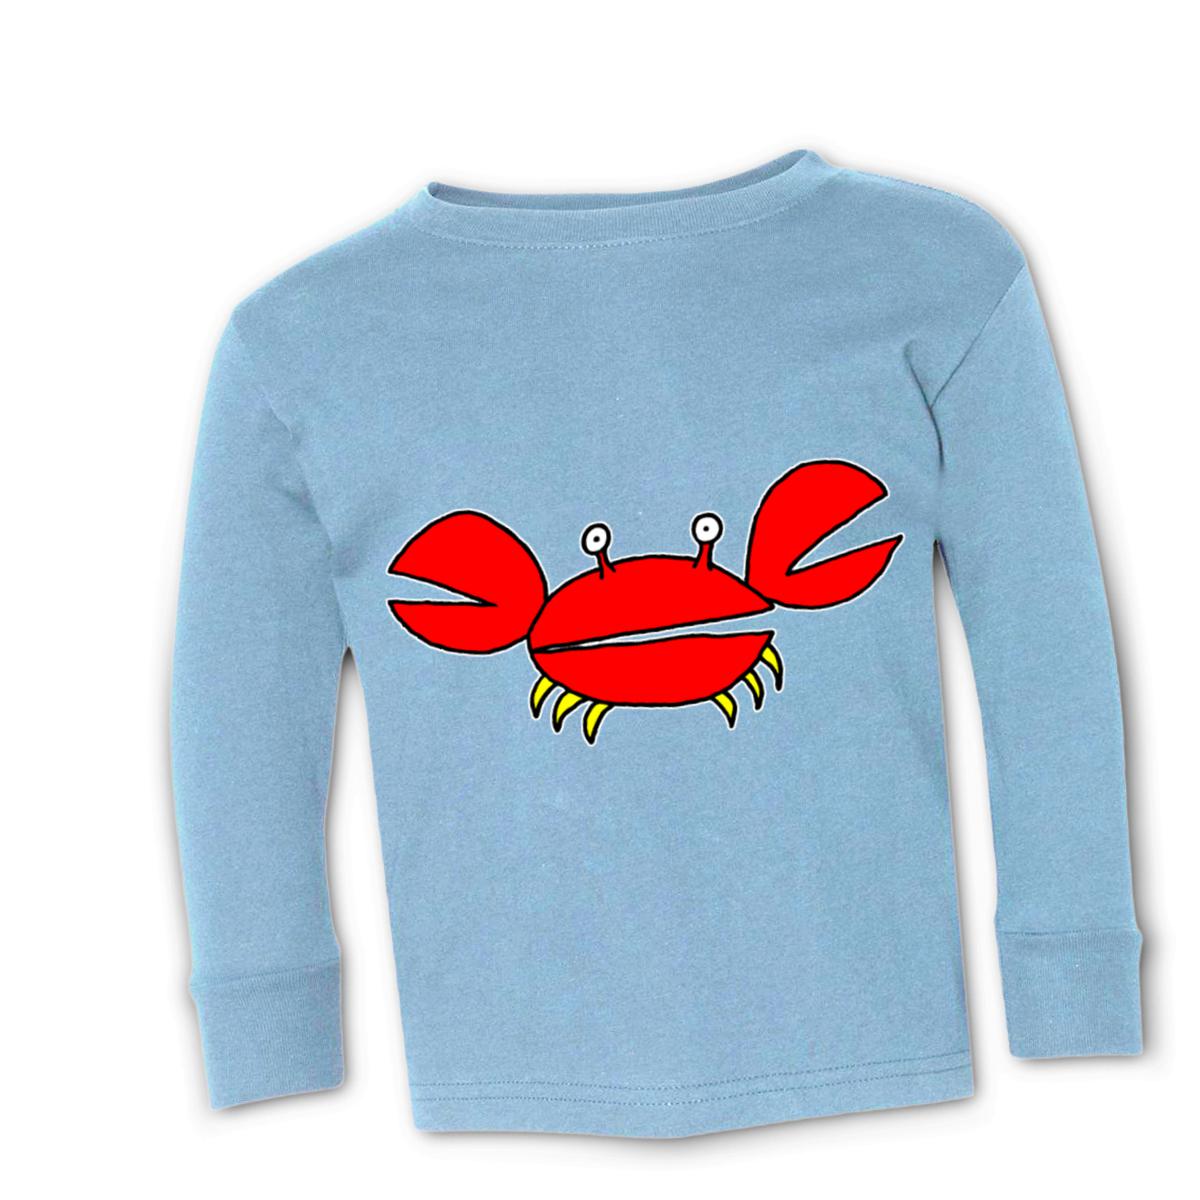 Crab Toddler Long Sleeve Tee 4T light-blue